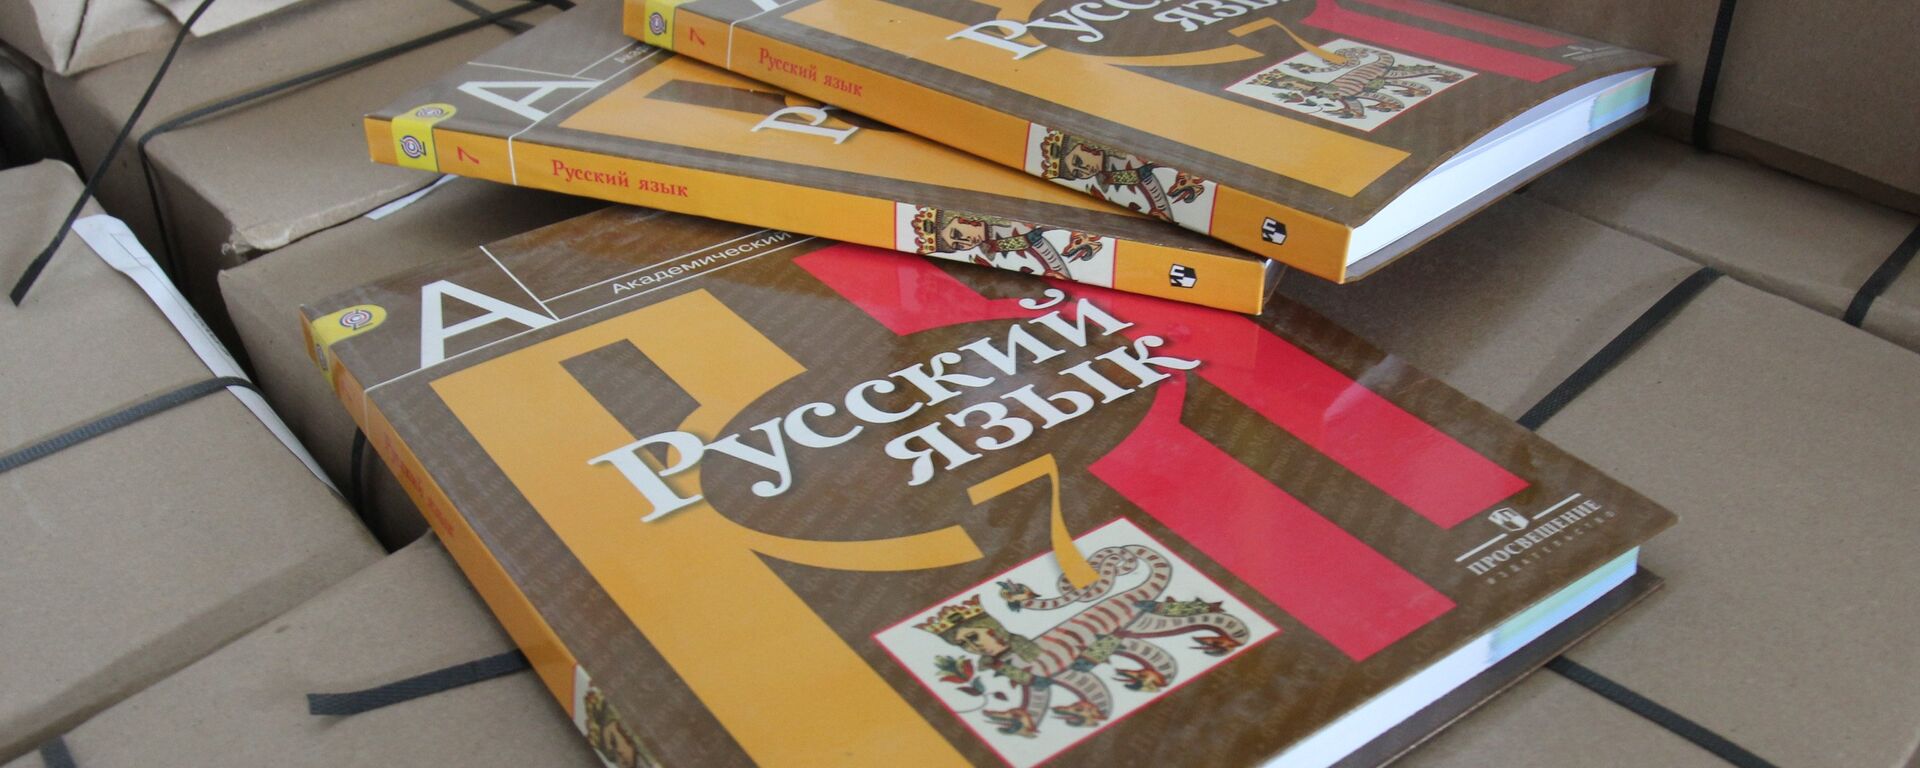 Textbooks on the Russian language. (File) - Sputnik Молдова, 1920, 24.09.2021